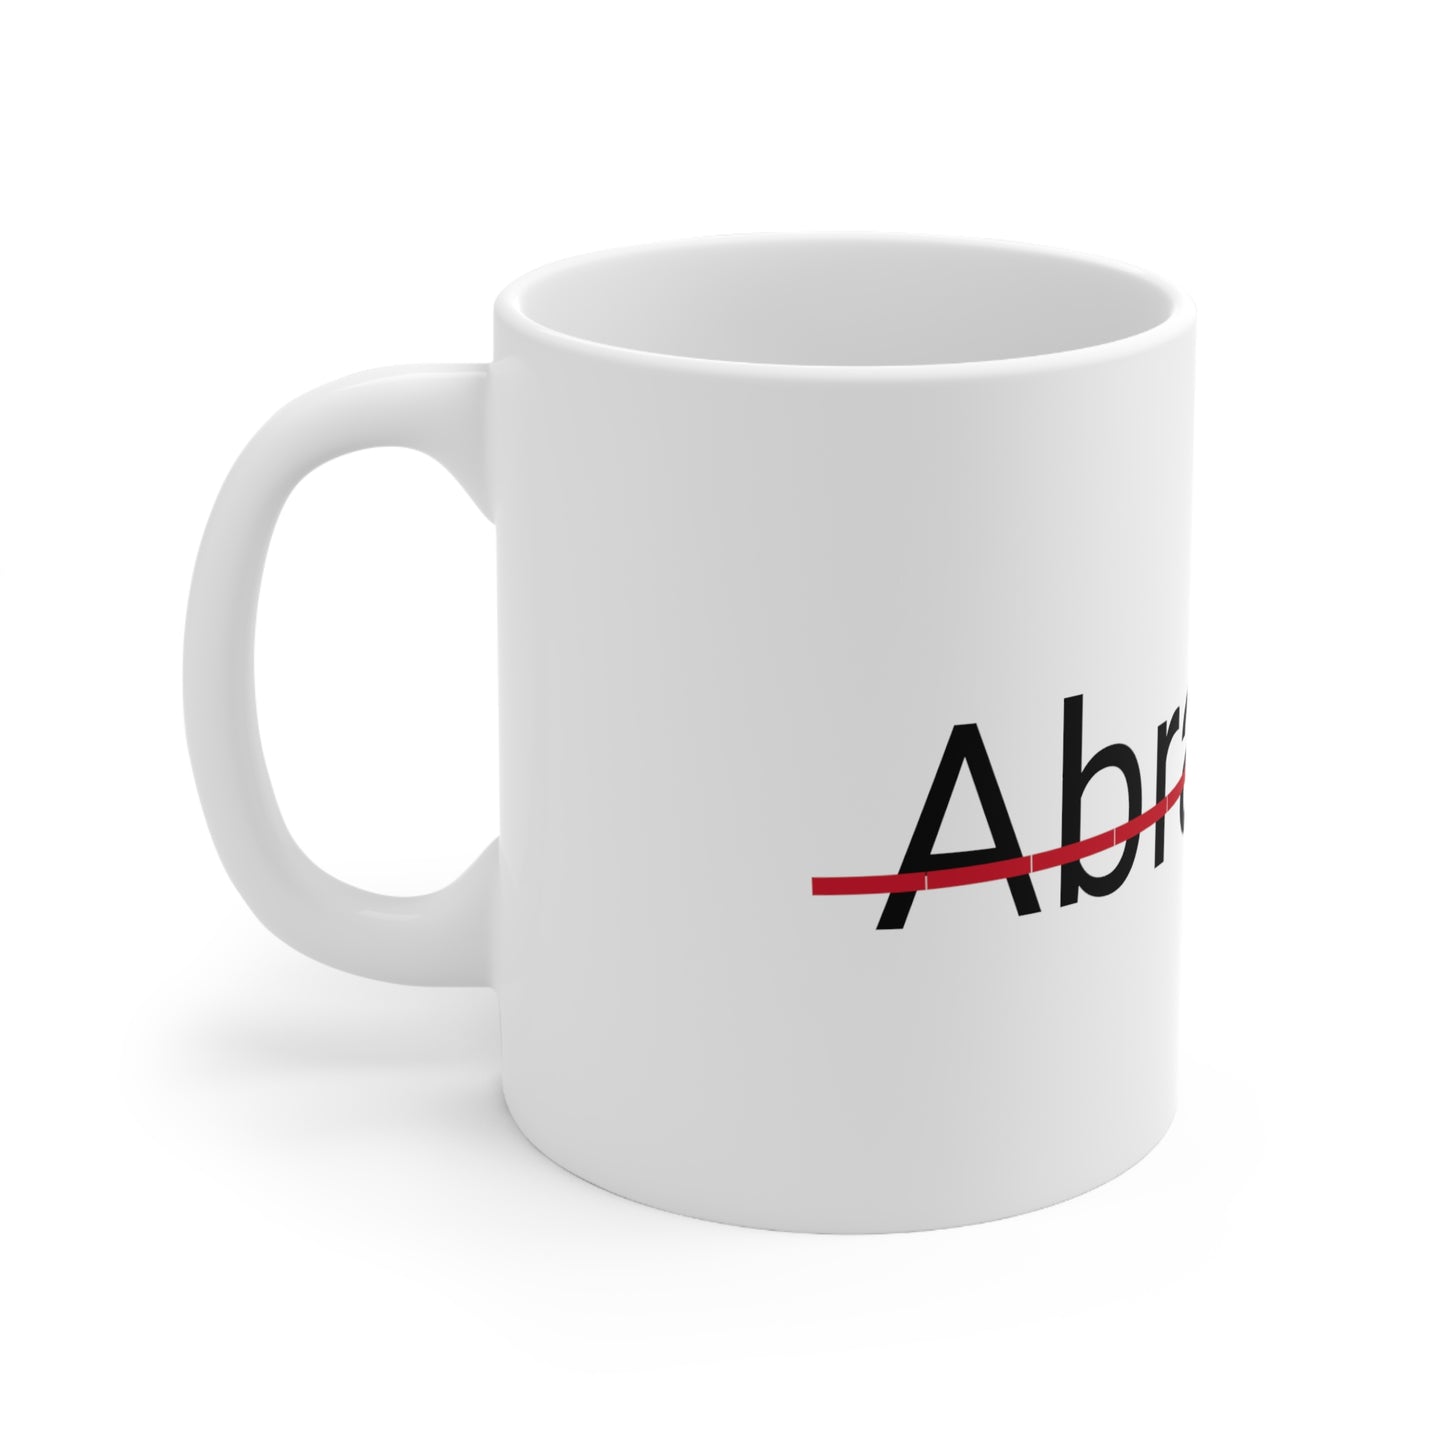 Abraham not my name coffee Mug 11oz